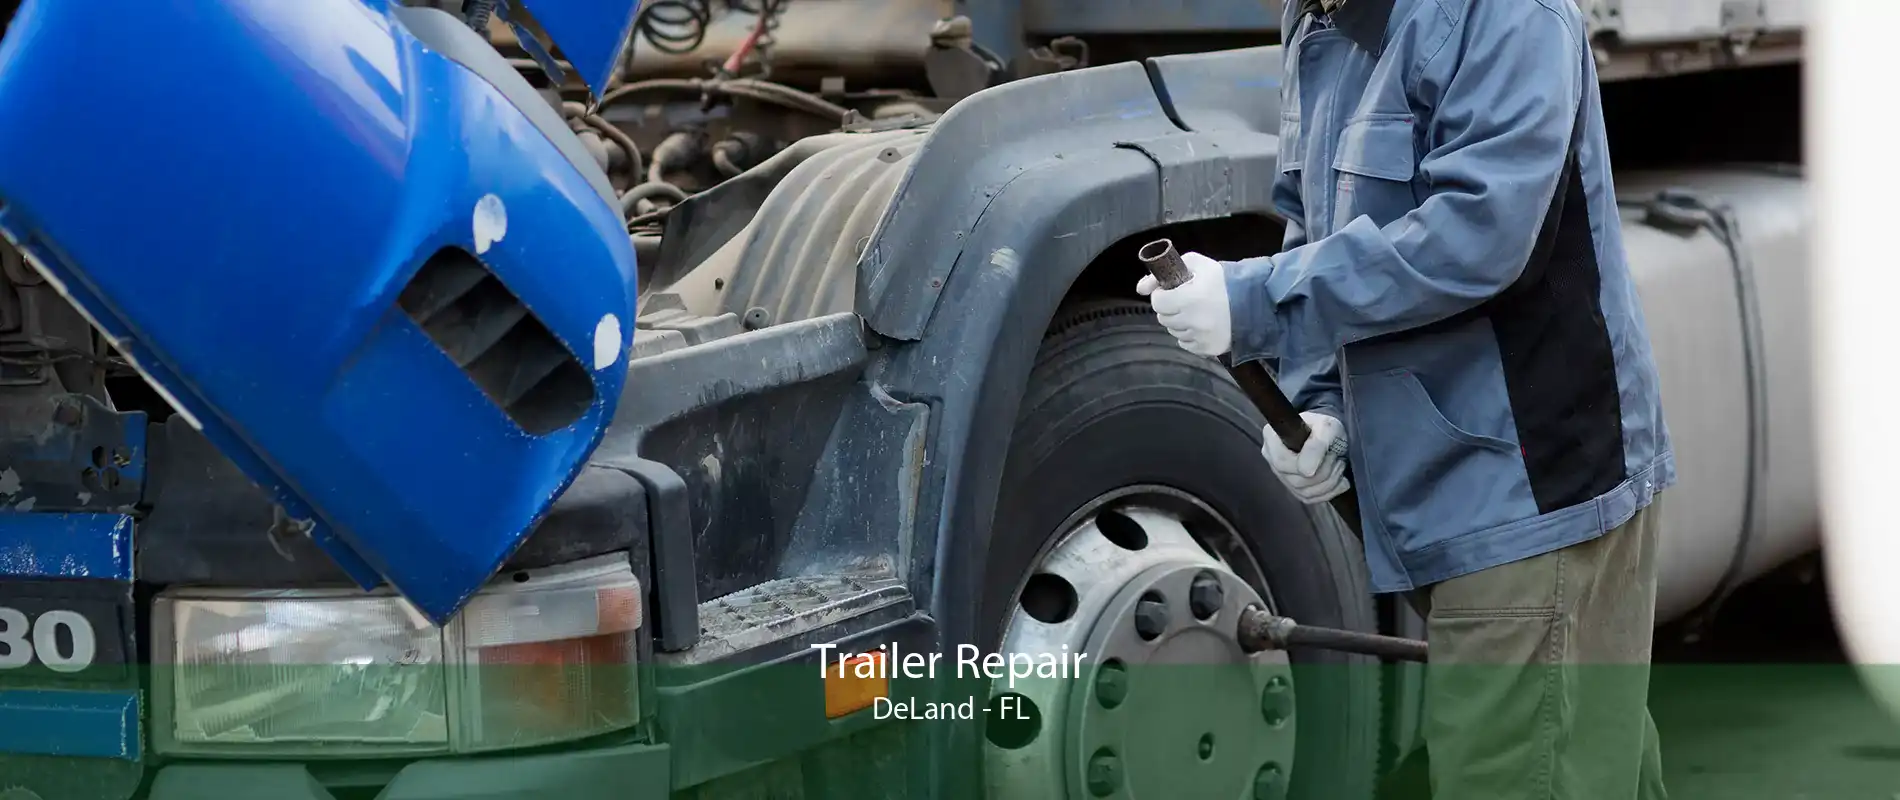 Trailer Repair DeLand - FL